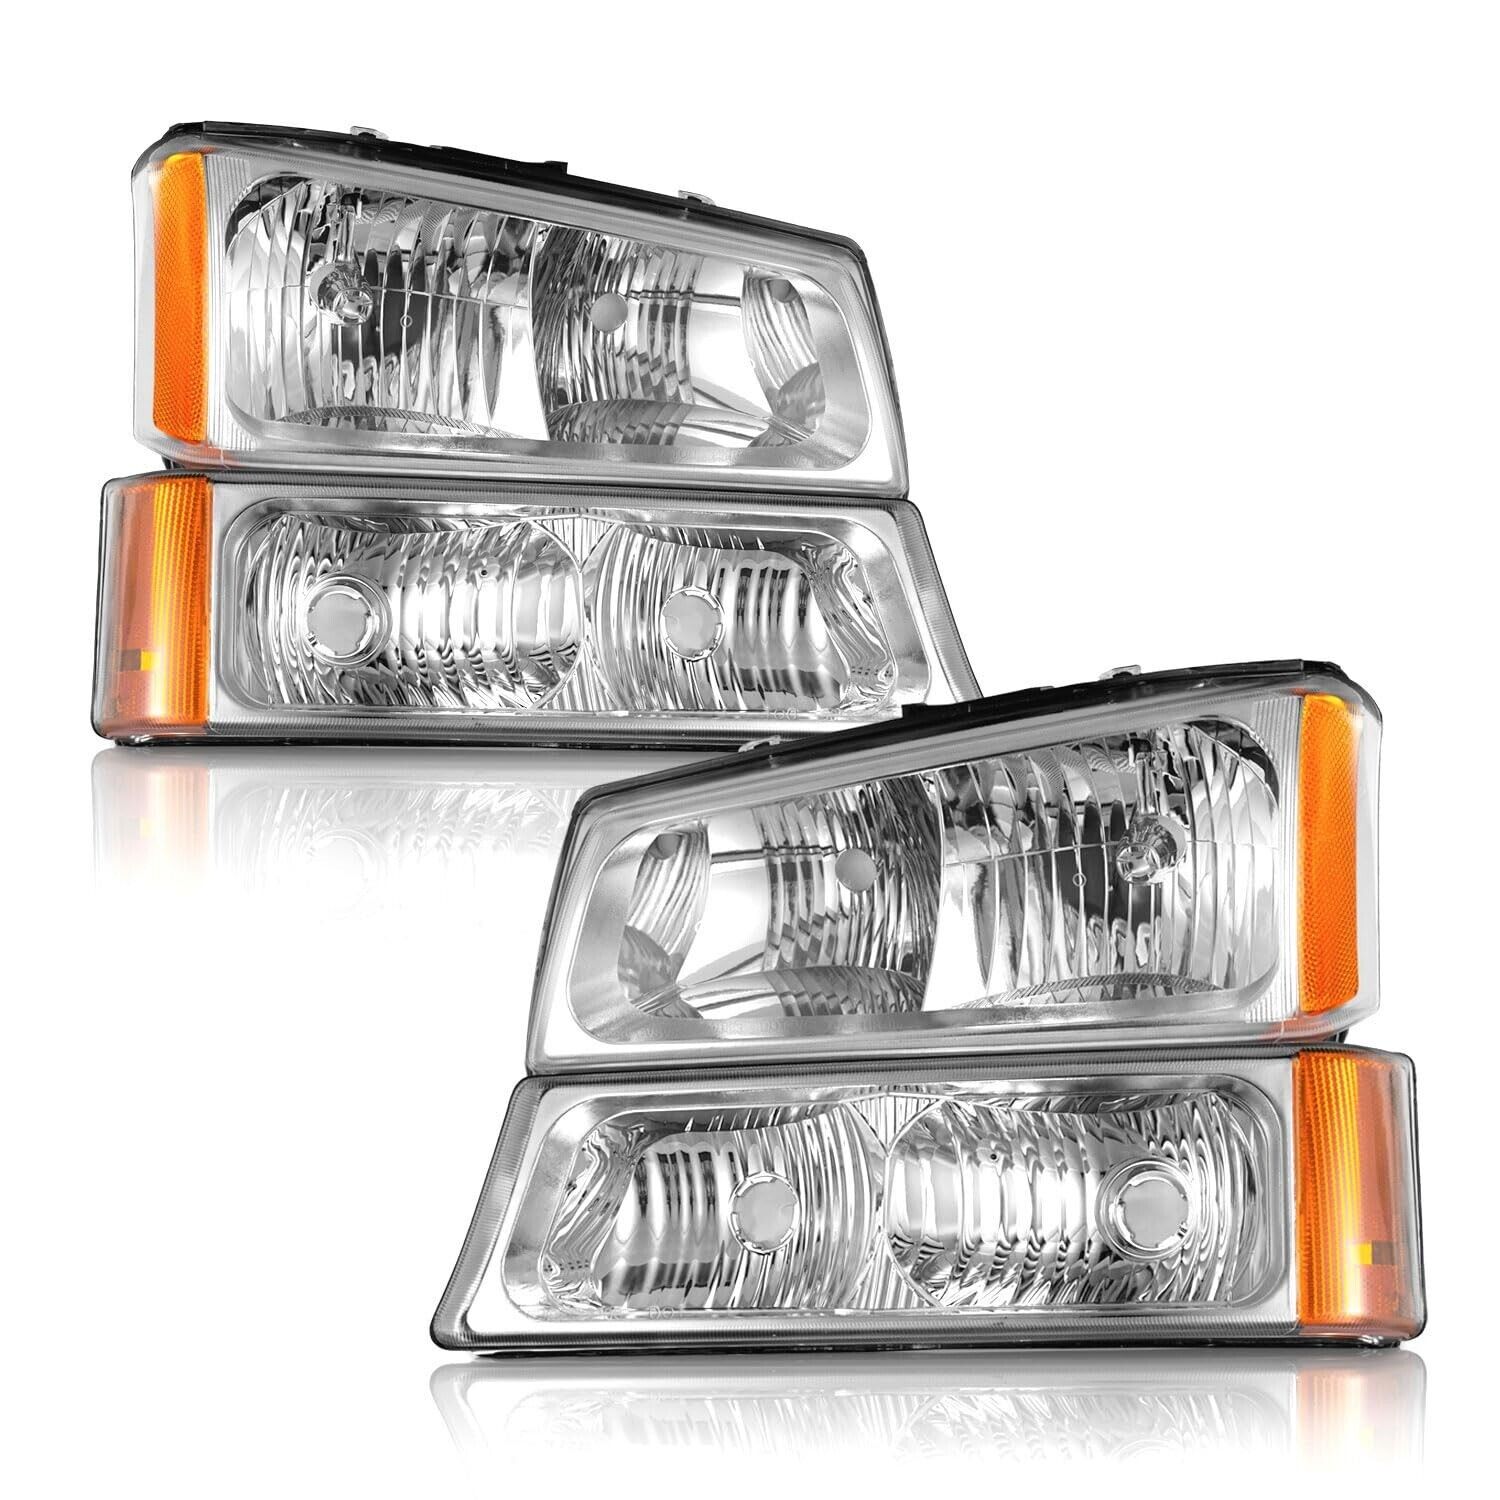 WEELMOTO For 2003-2006 Chevy Silverado Avalanche Headlights+Bumper Lamps LH+RH